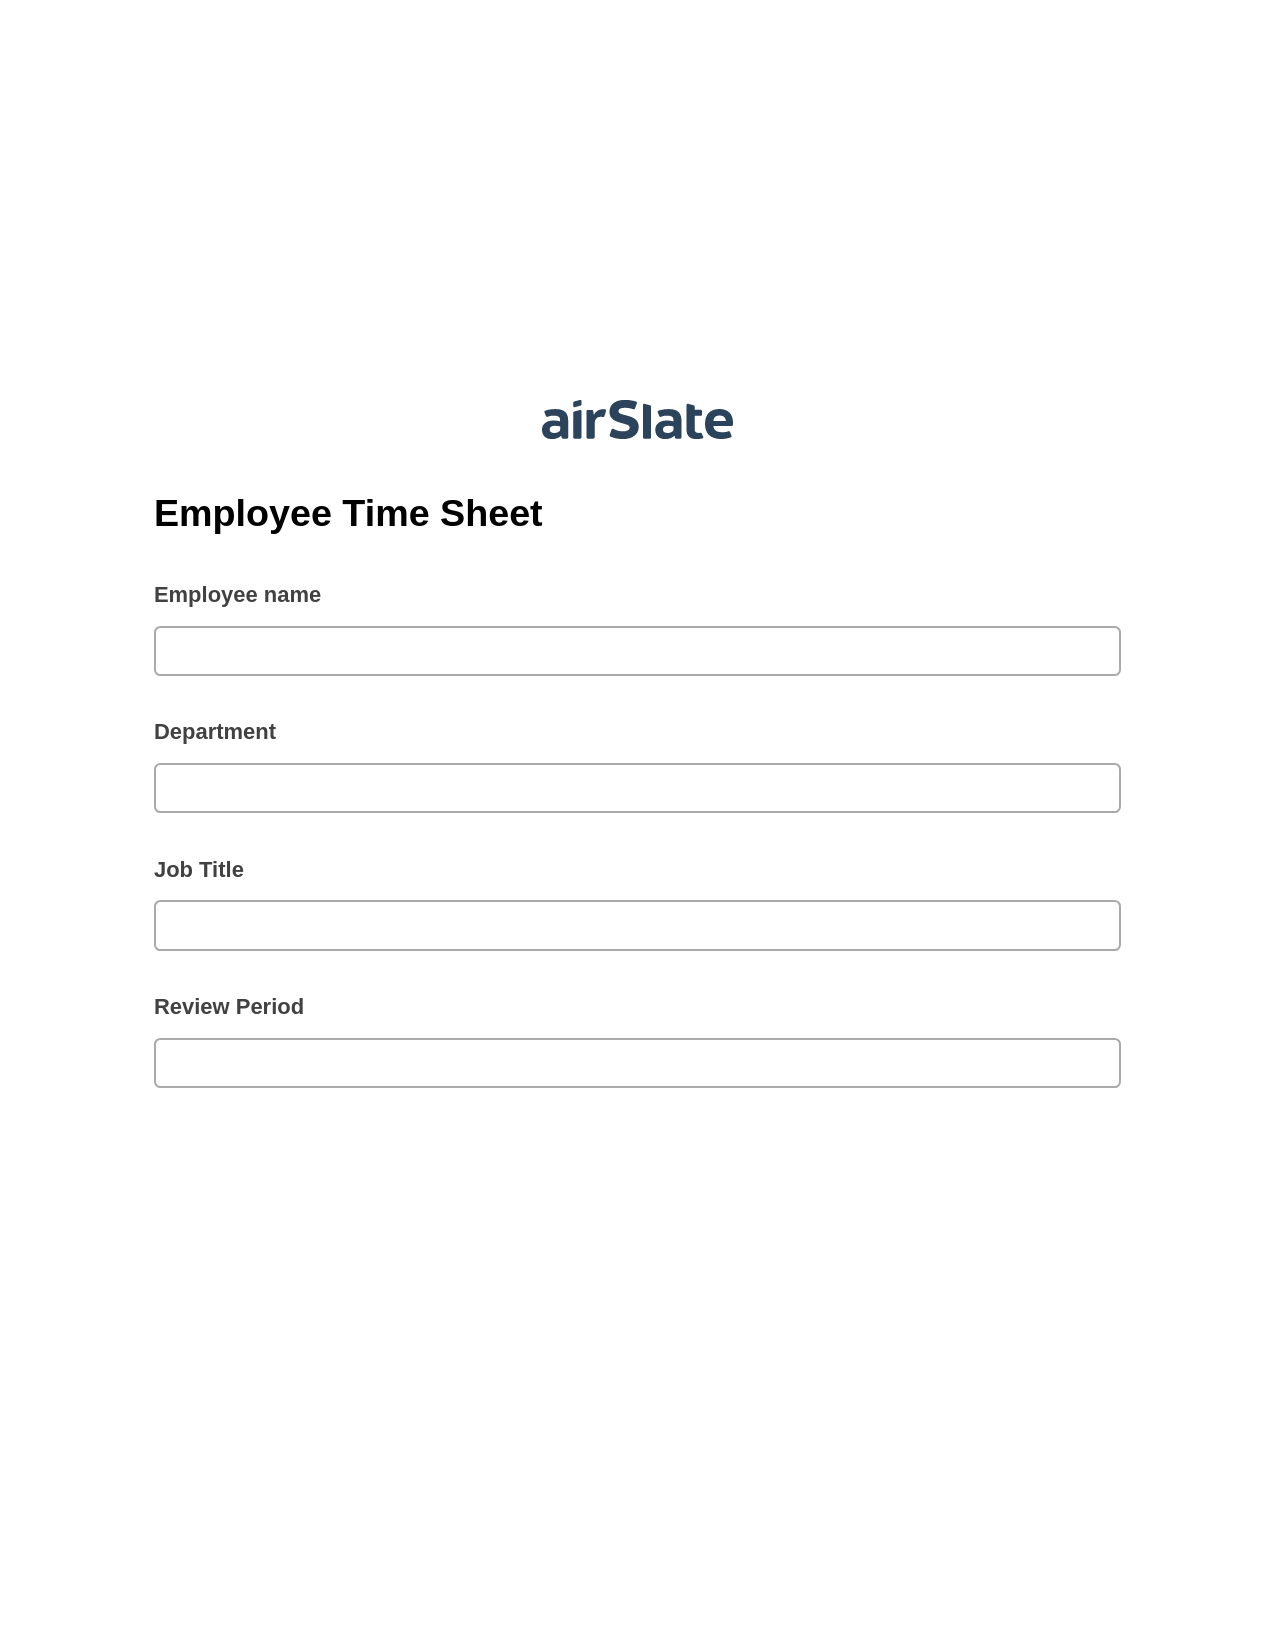 Multirole Employee Time Sheet Pre-fill from CSV File Bot, Create slate addon, Export to Google Sheet Bot